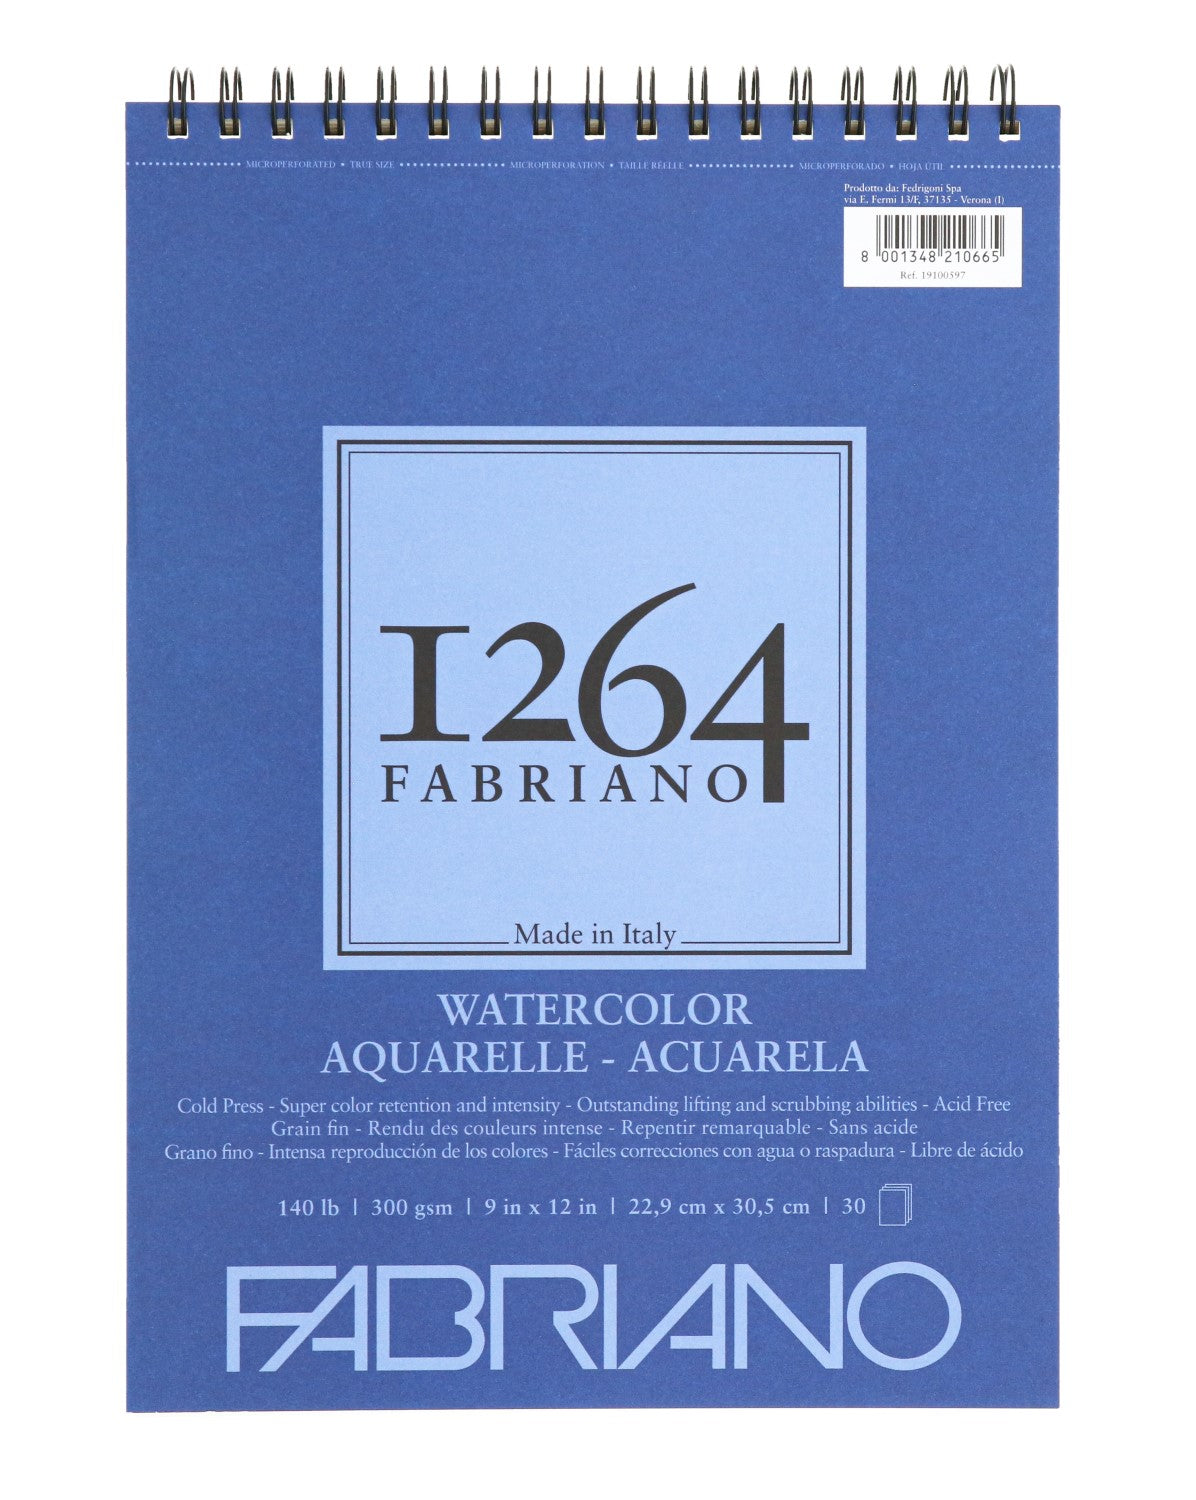 1264 Fabriano Watercolor Paper Pads – spokane-art-supply